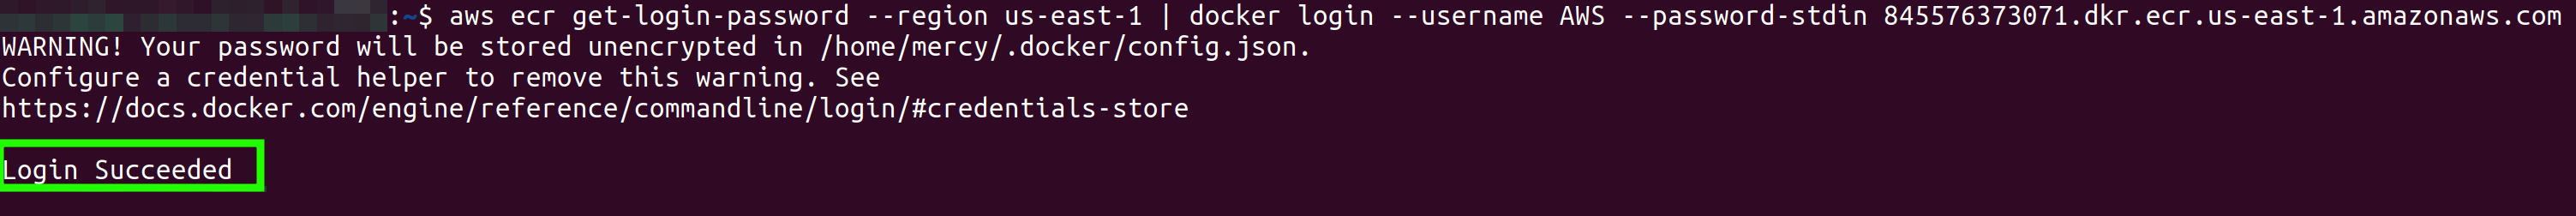 Authenticating Docker client